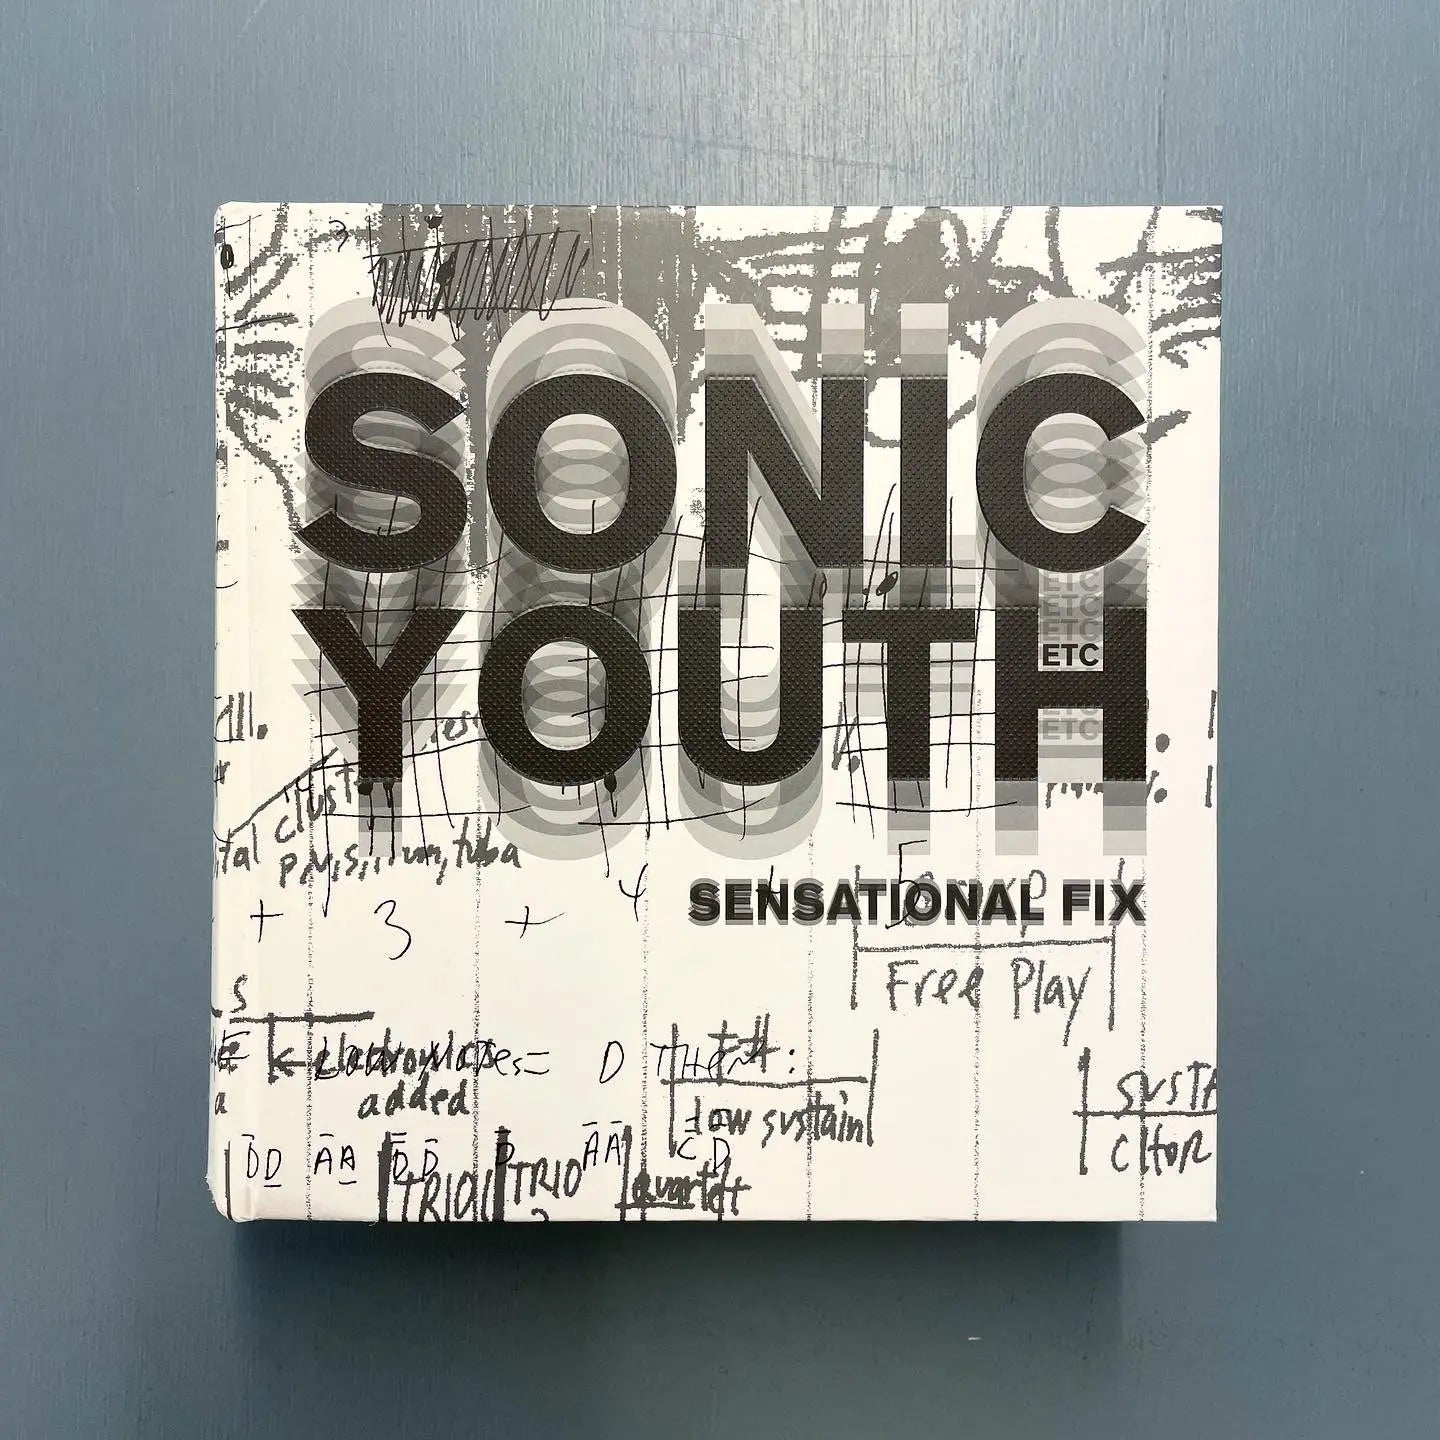 Sonic Youth - Sensational Fix - Life 2008 - Saint-Martin Bookshop